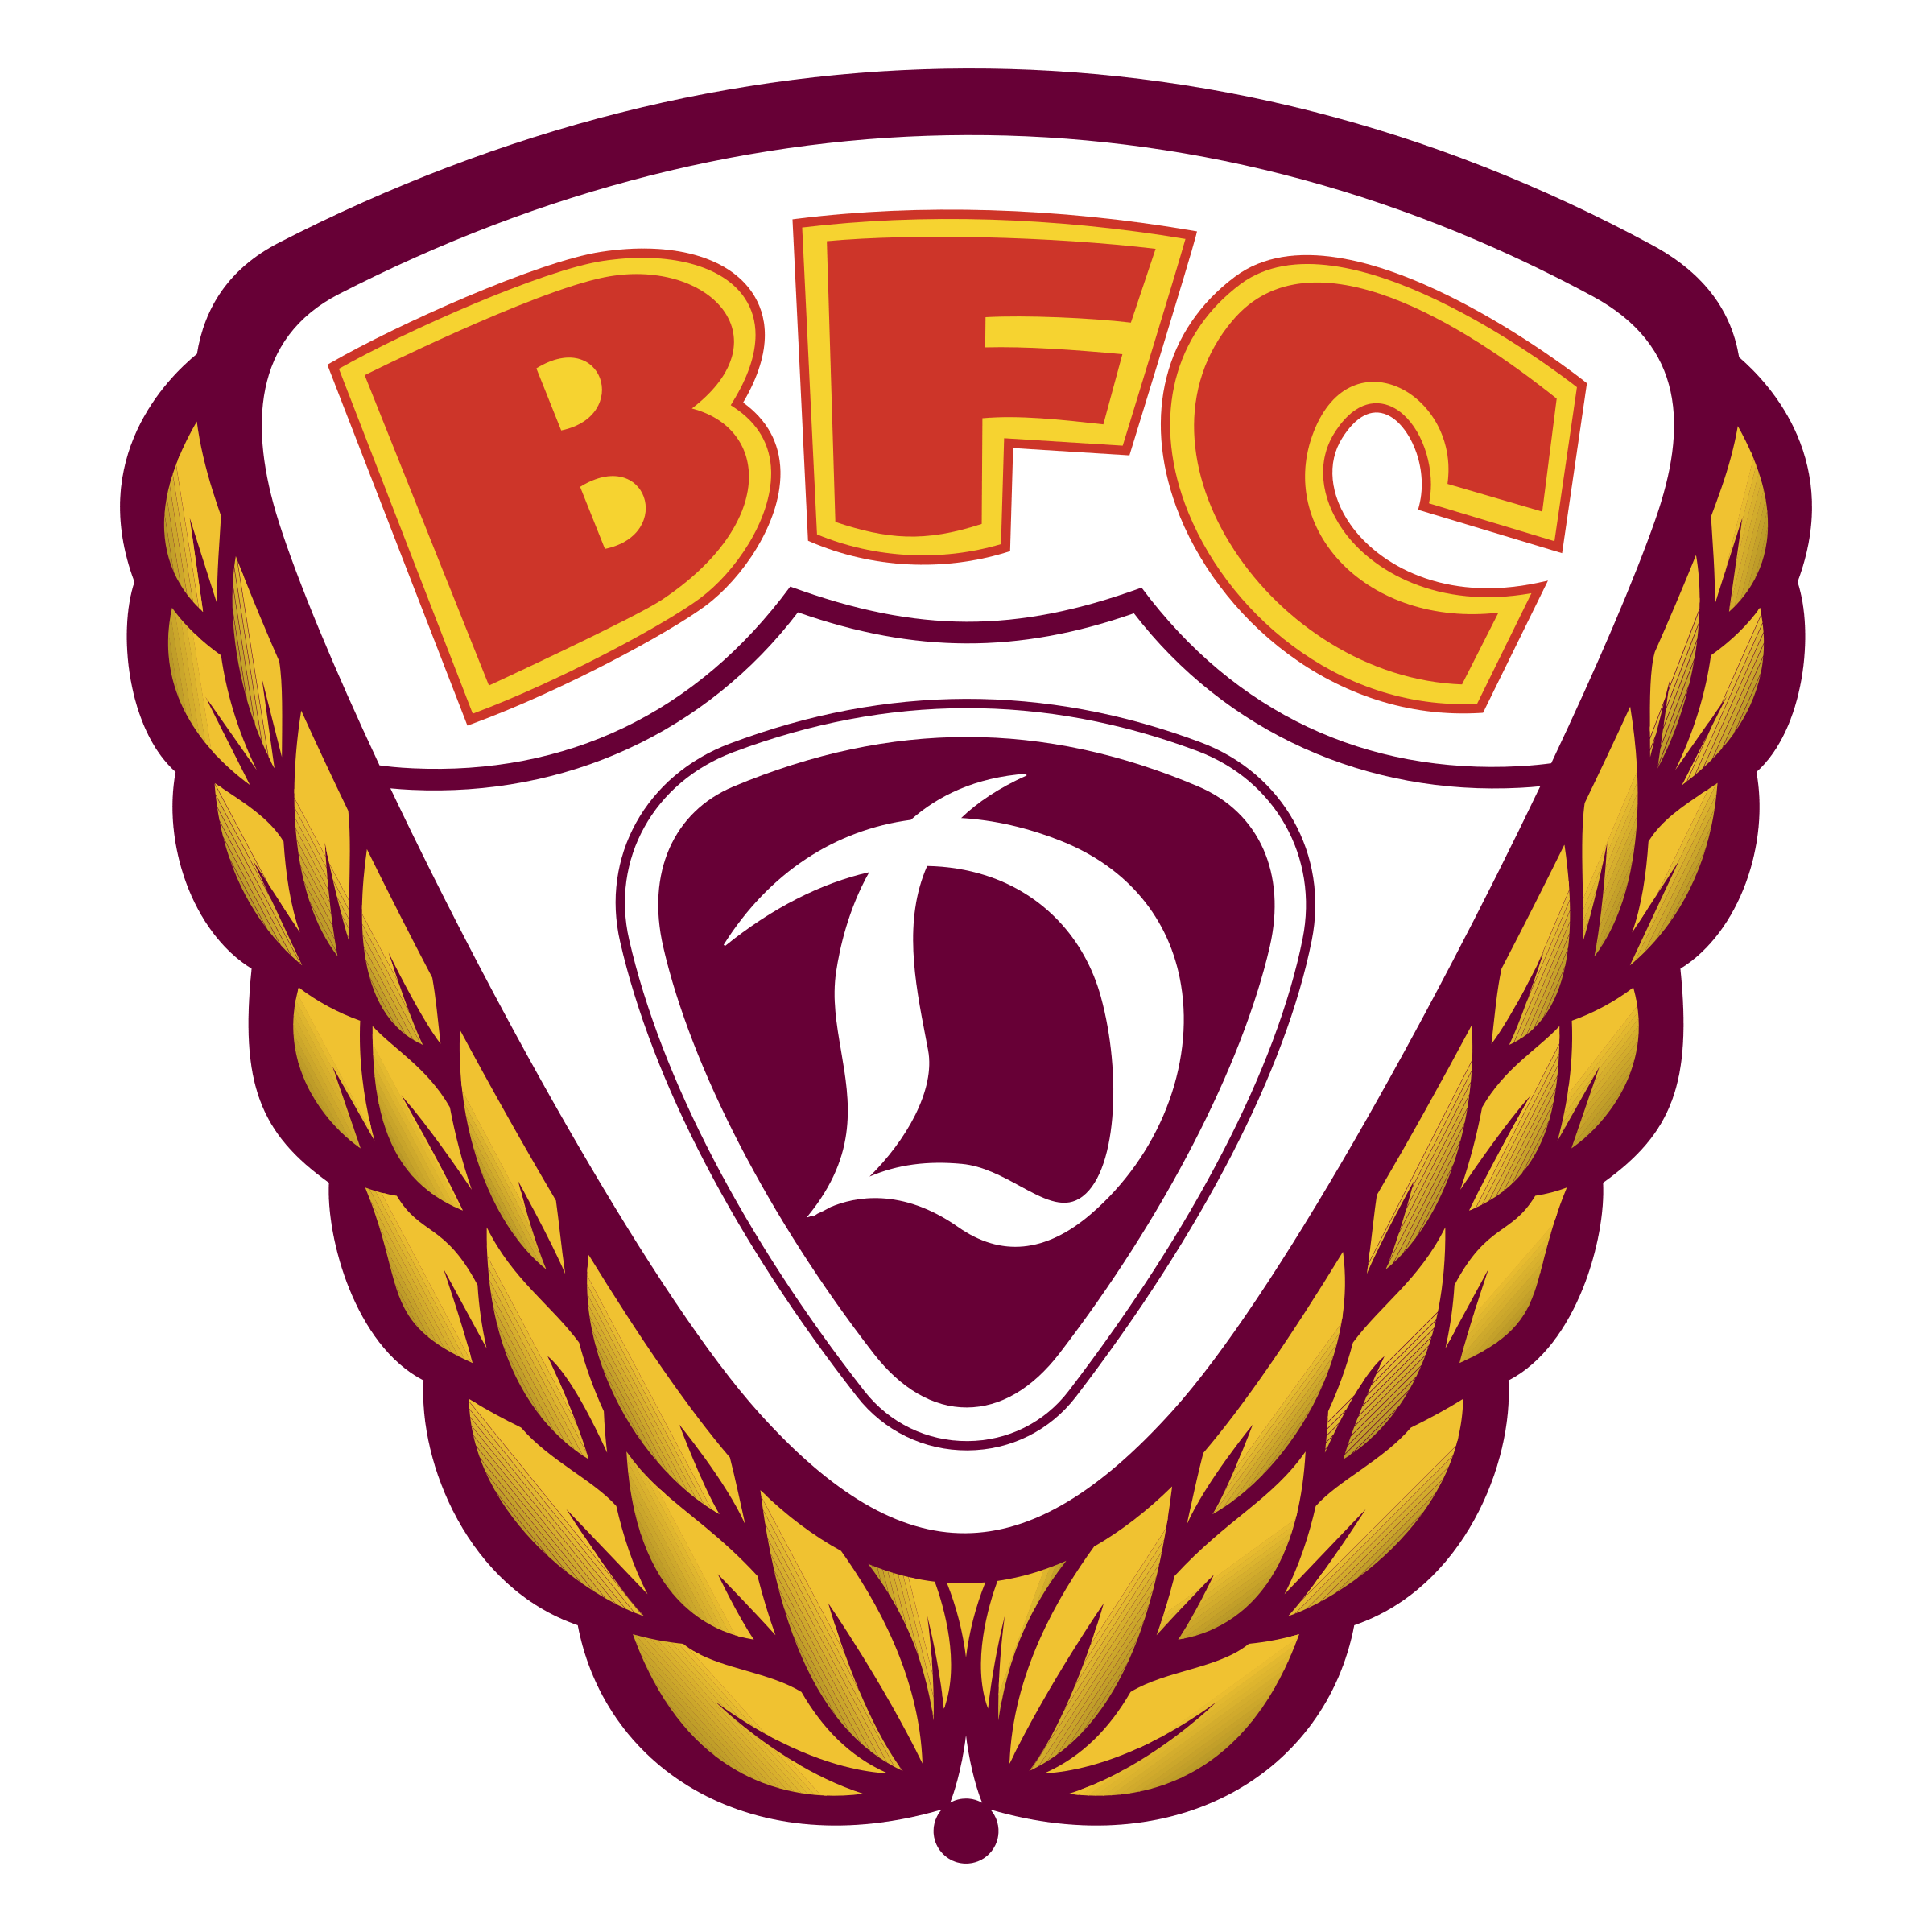 BFC Logo - BFC Dynamo Berlin Logo PNG Transparent & SVG Vector